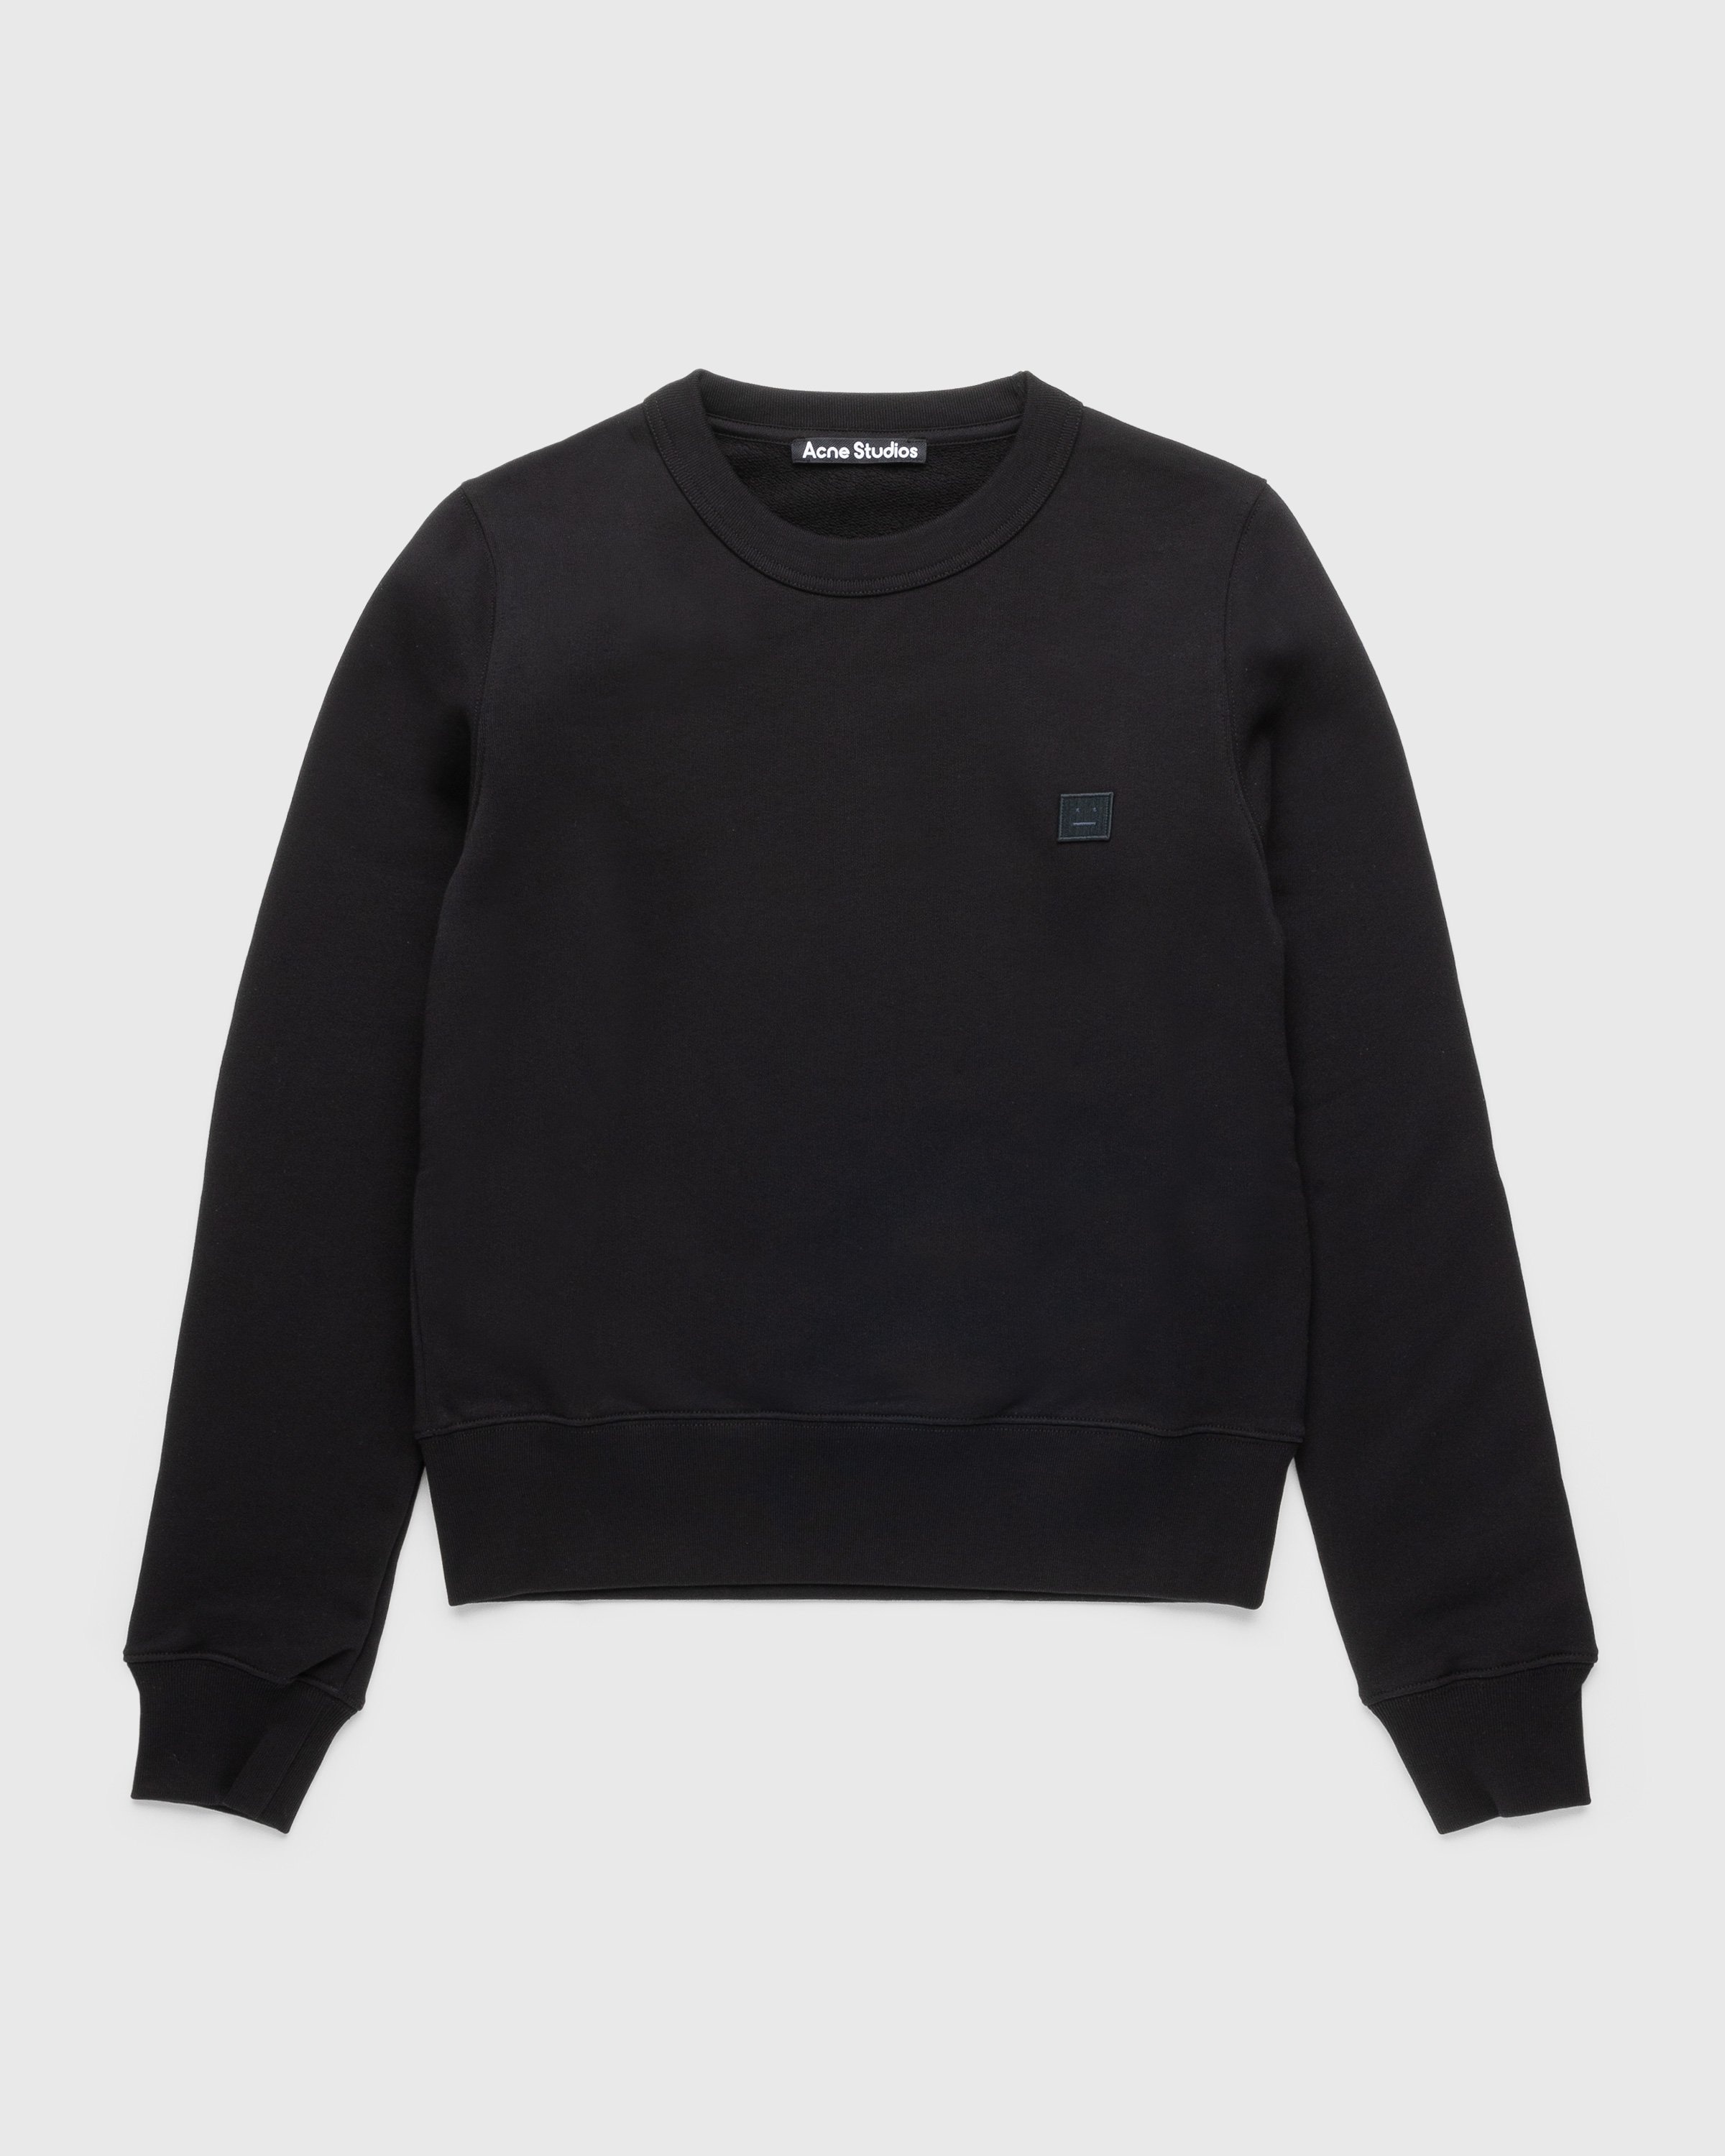 Acne Studios – Organic Cotton Crewneck Sweatshirt Black - Sweats - Black - Image 1